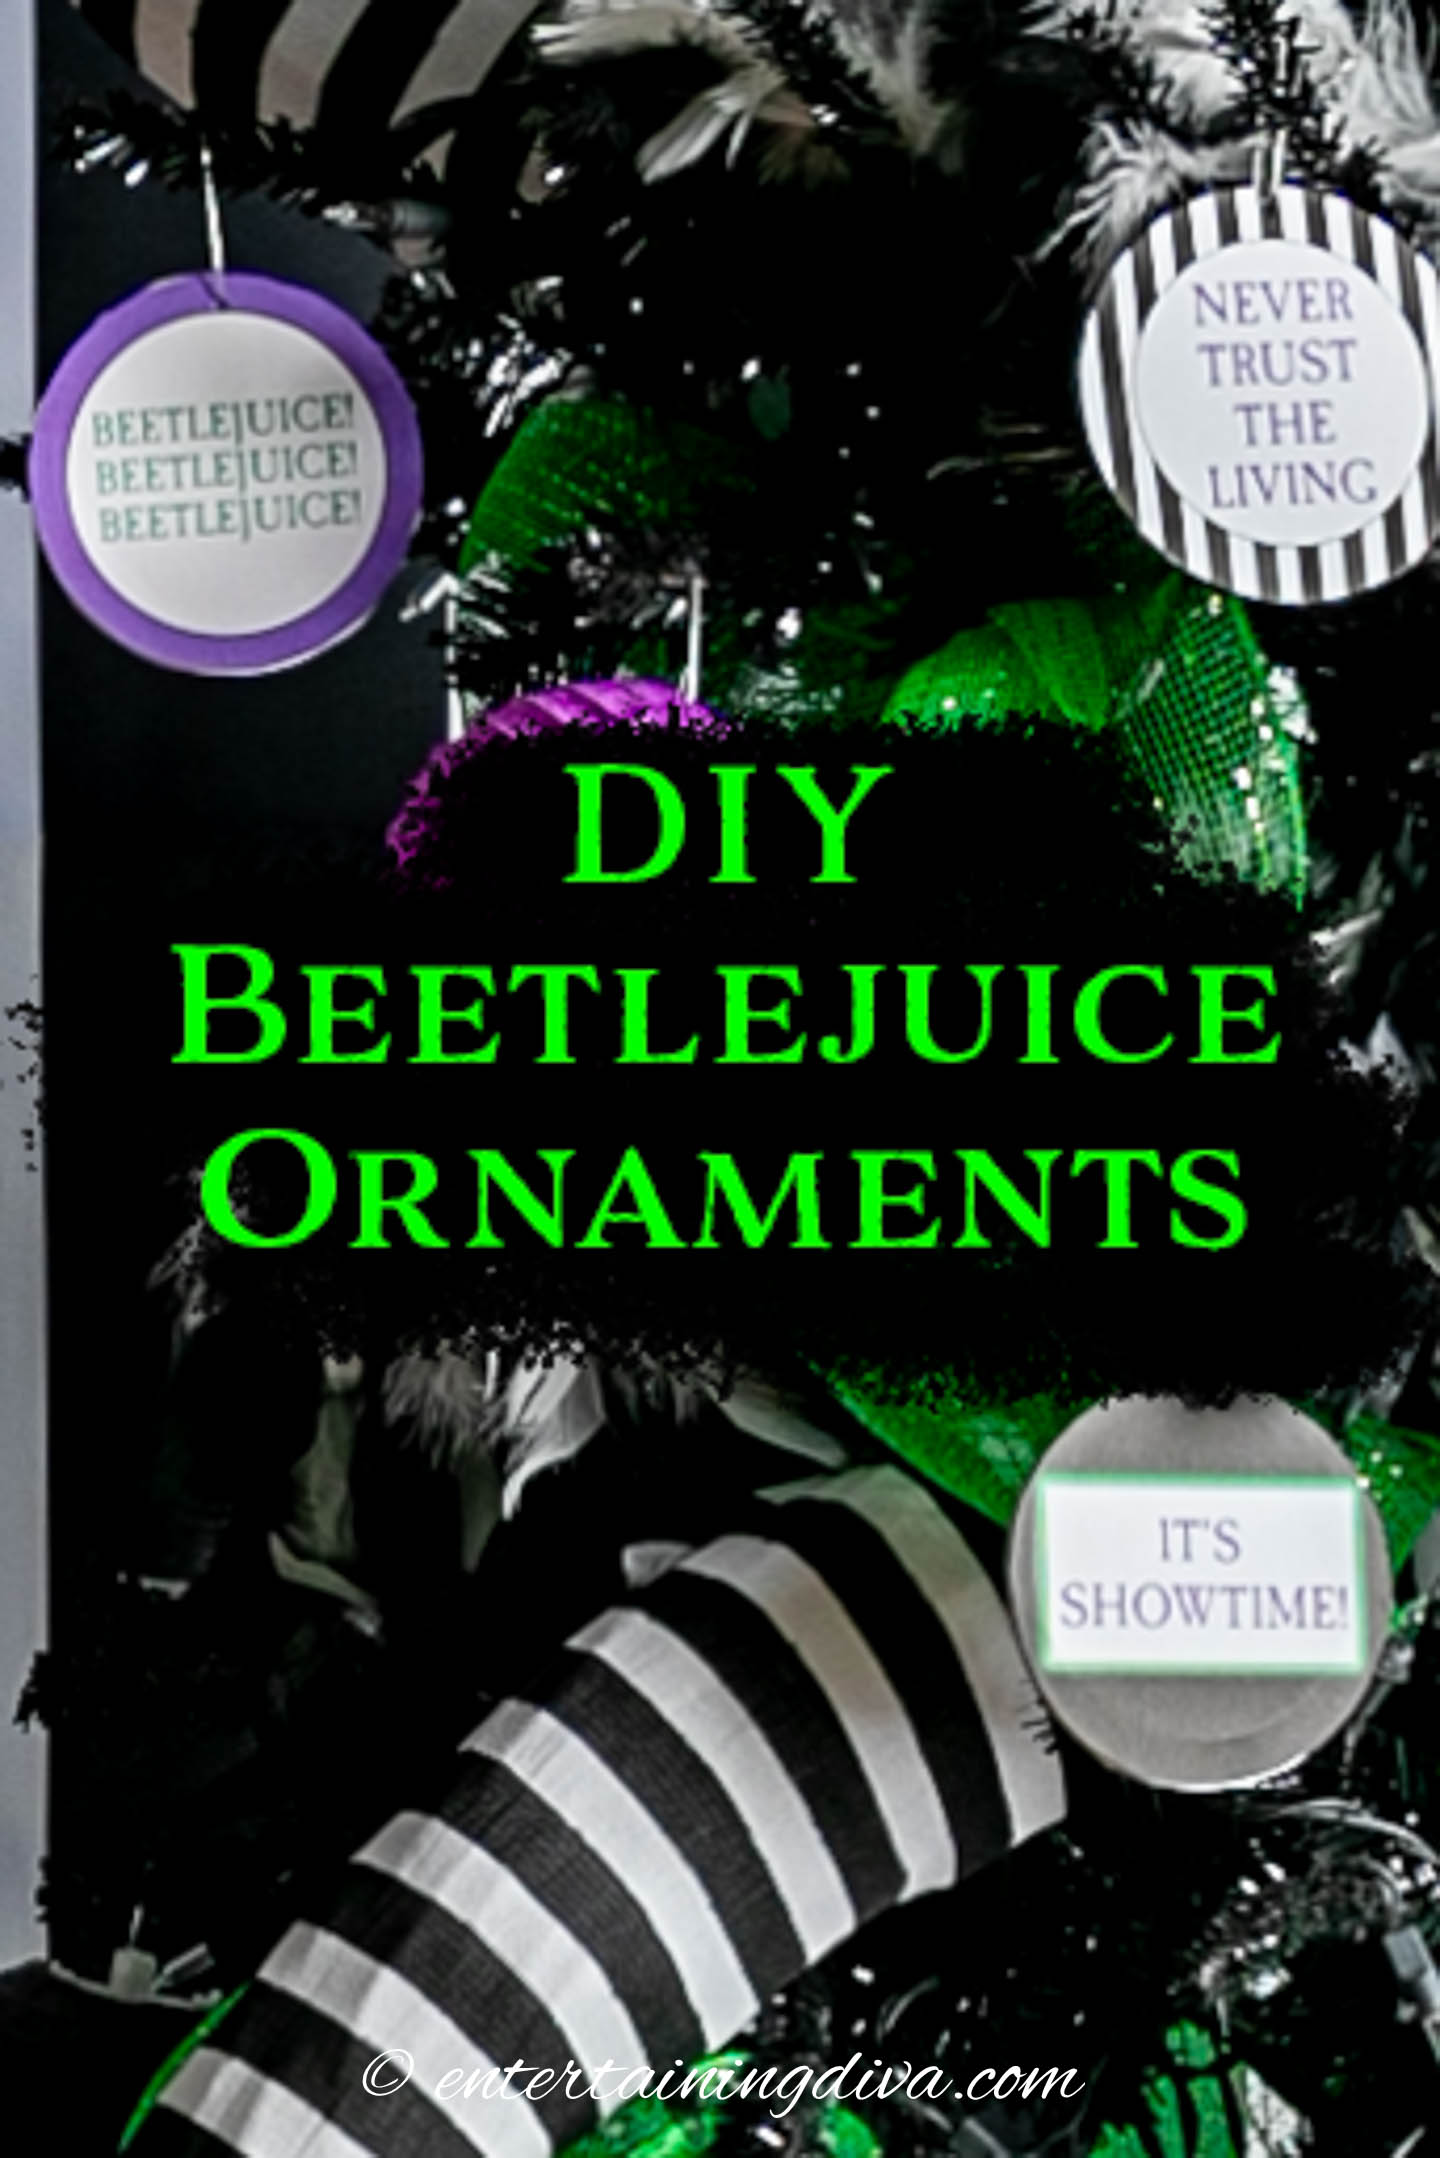 DIY Beetlejuice tree ornaments